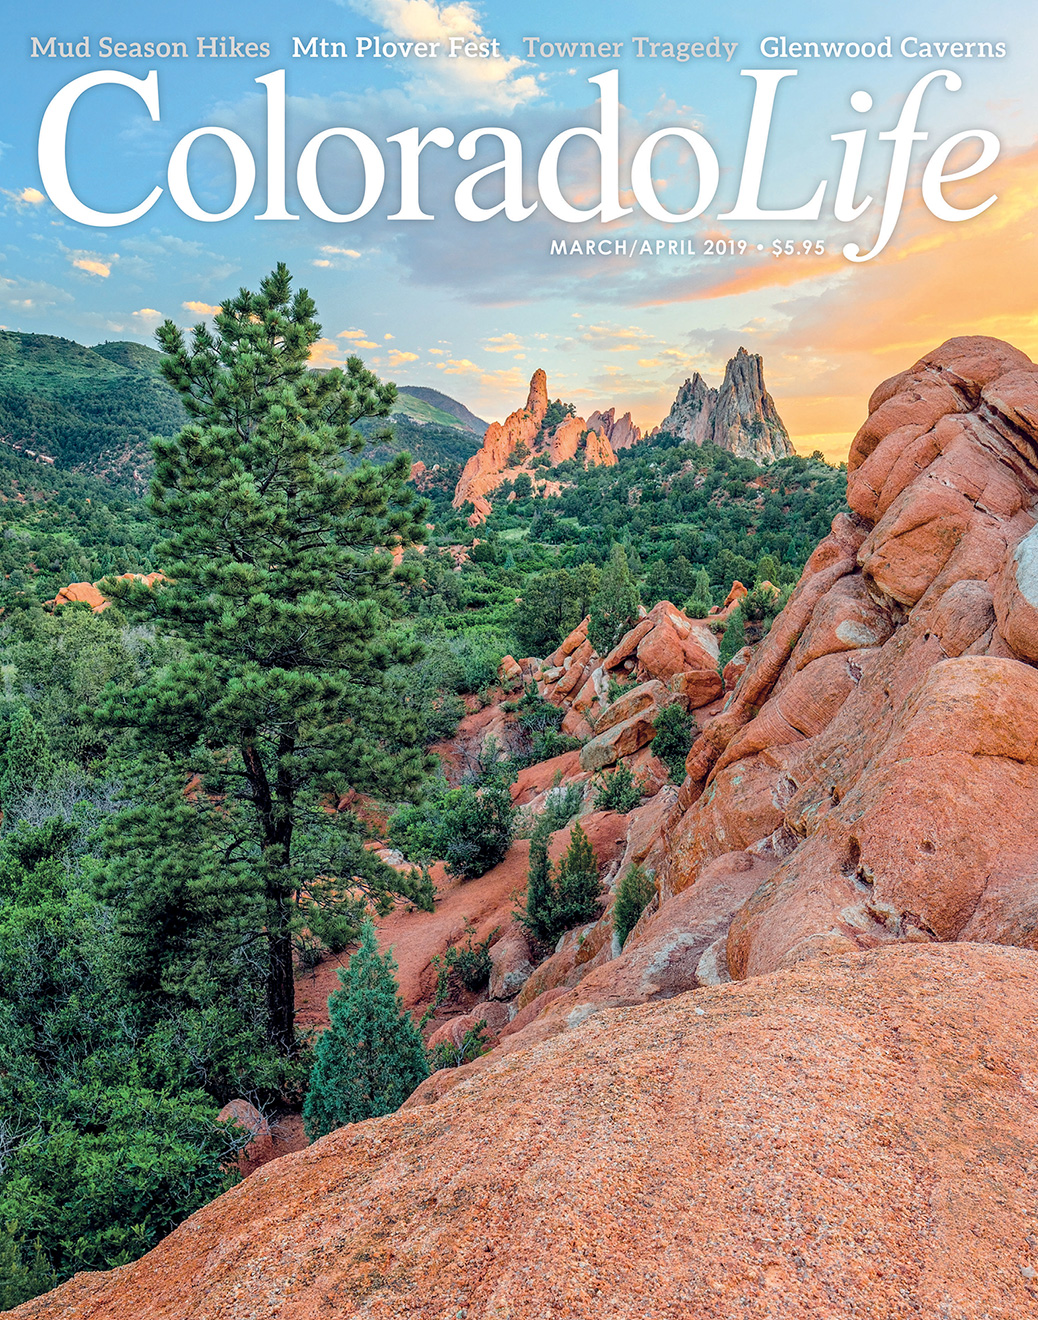 Colorado Life - March/April 2019 - Colorado Life Cover -  Photography